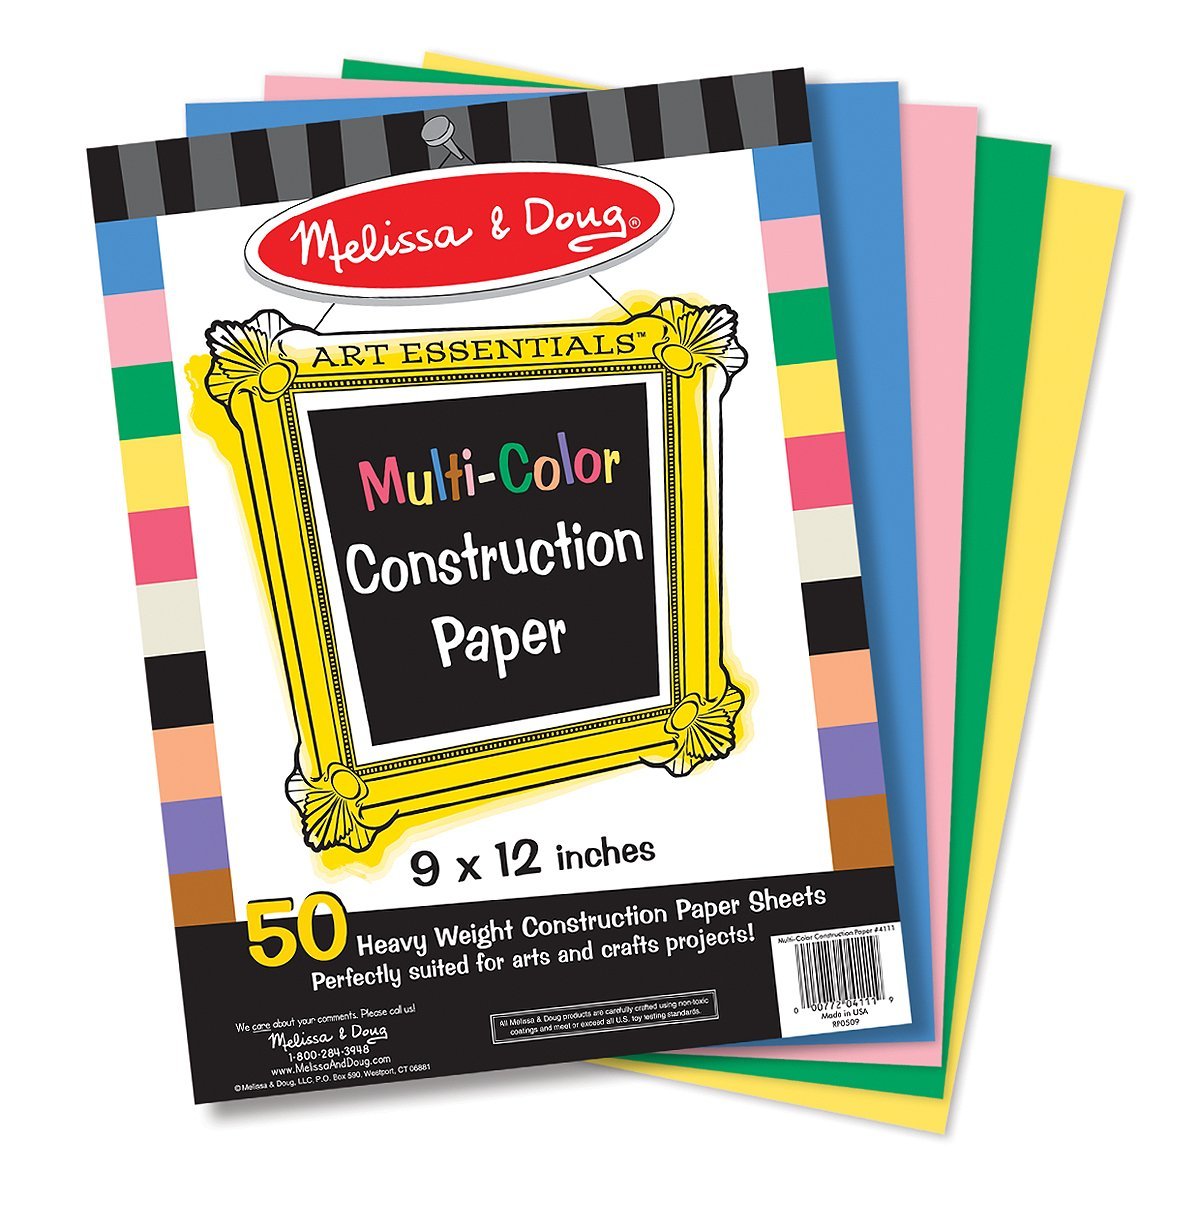 Melissa & Doug Multi-Color Construction Paper 50 Sheet Only $1.99!